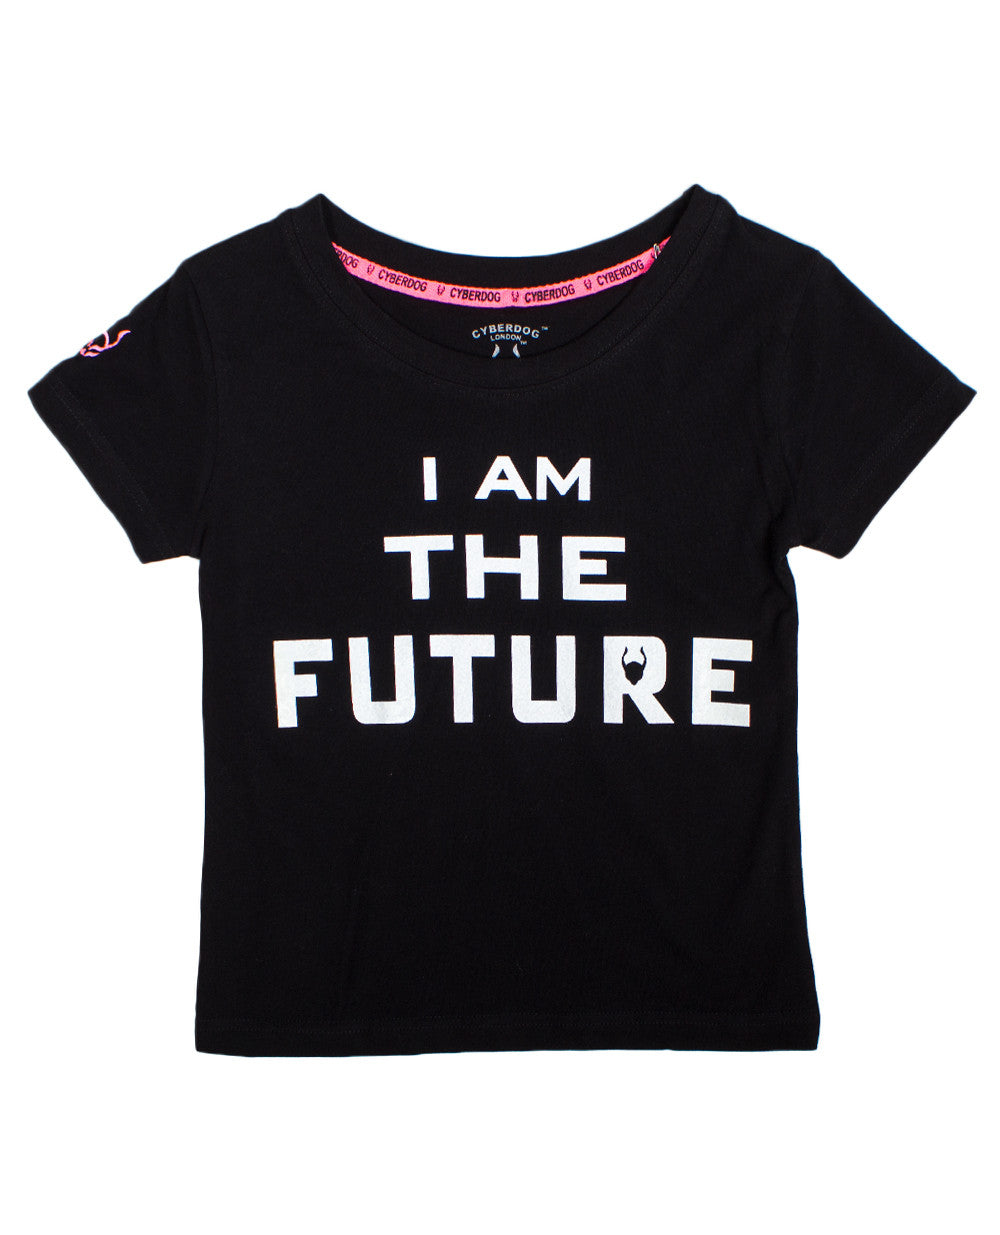 KIDS GIRL S/S I AM THE FUTURE.